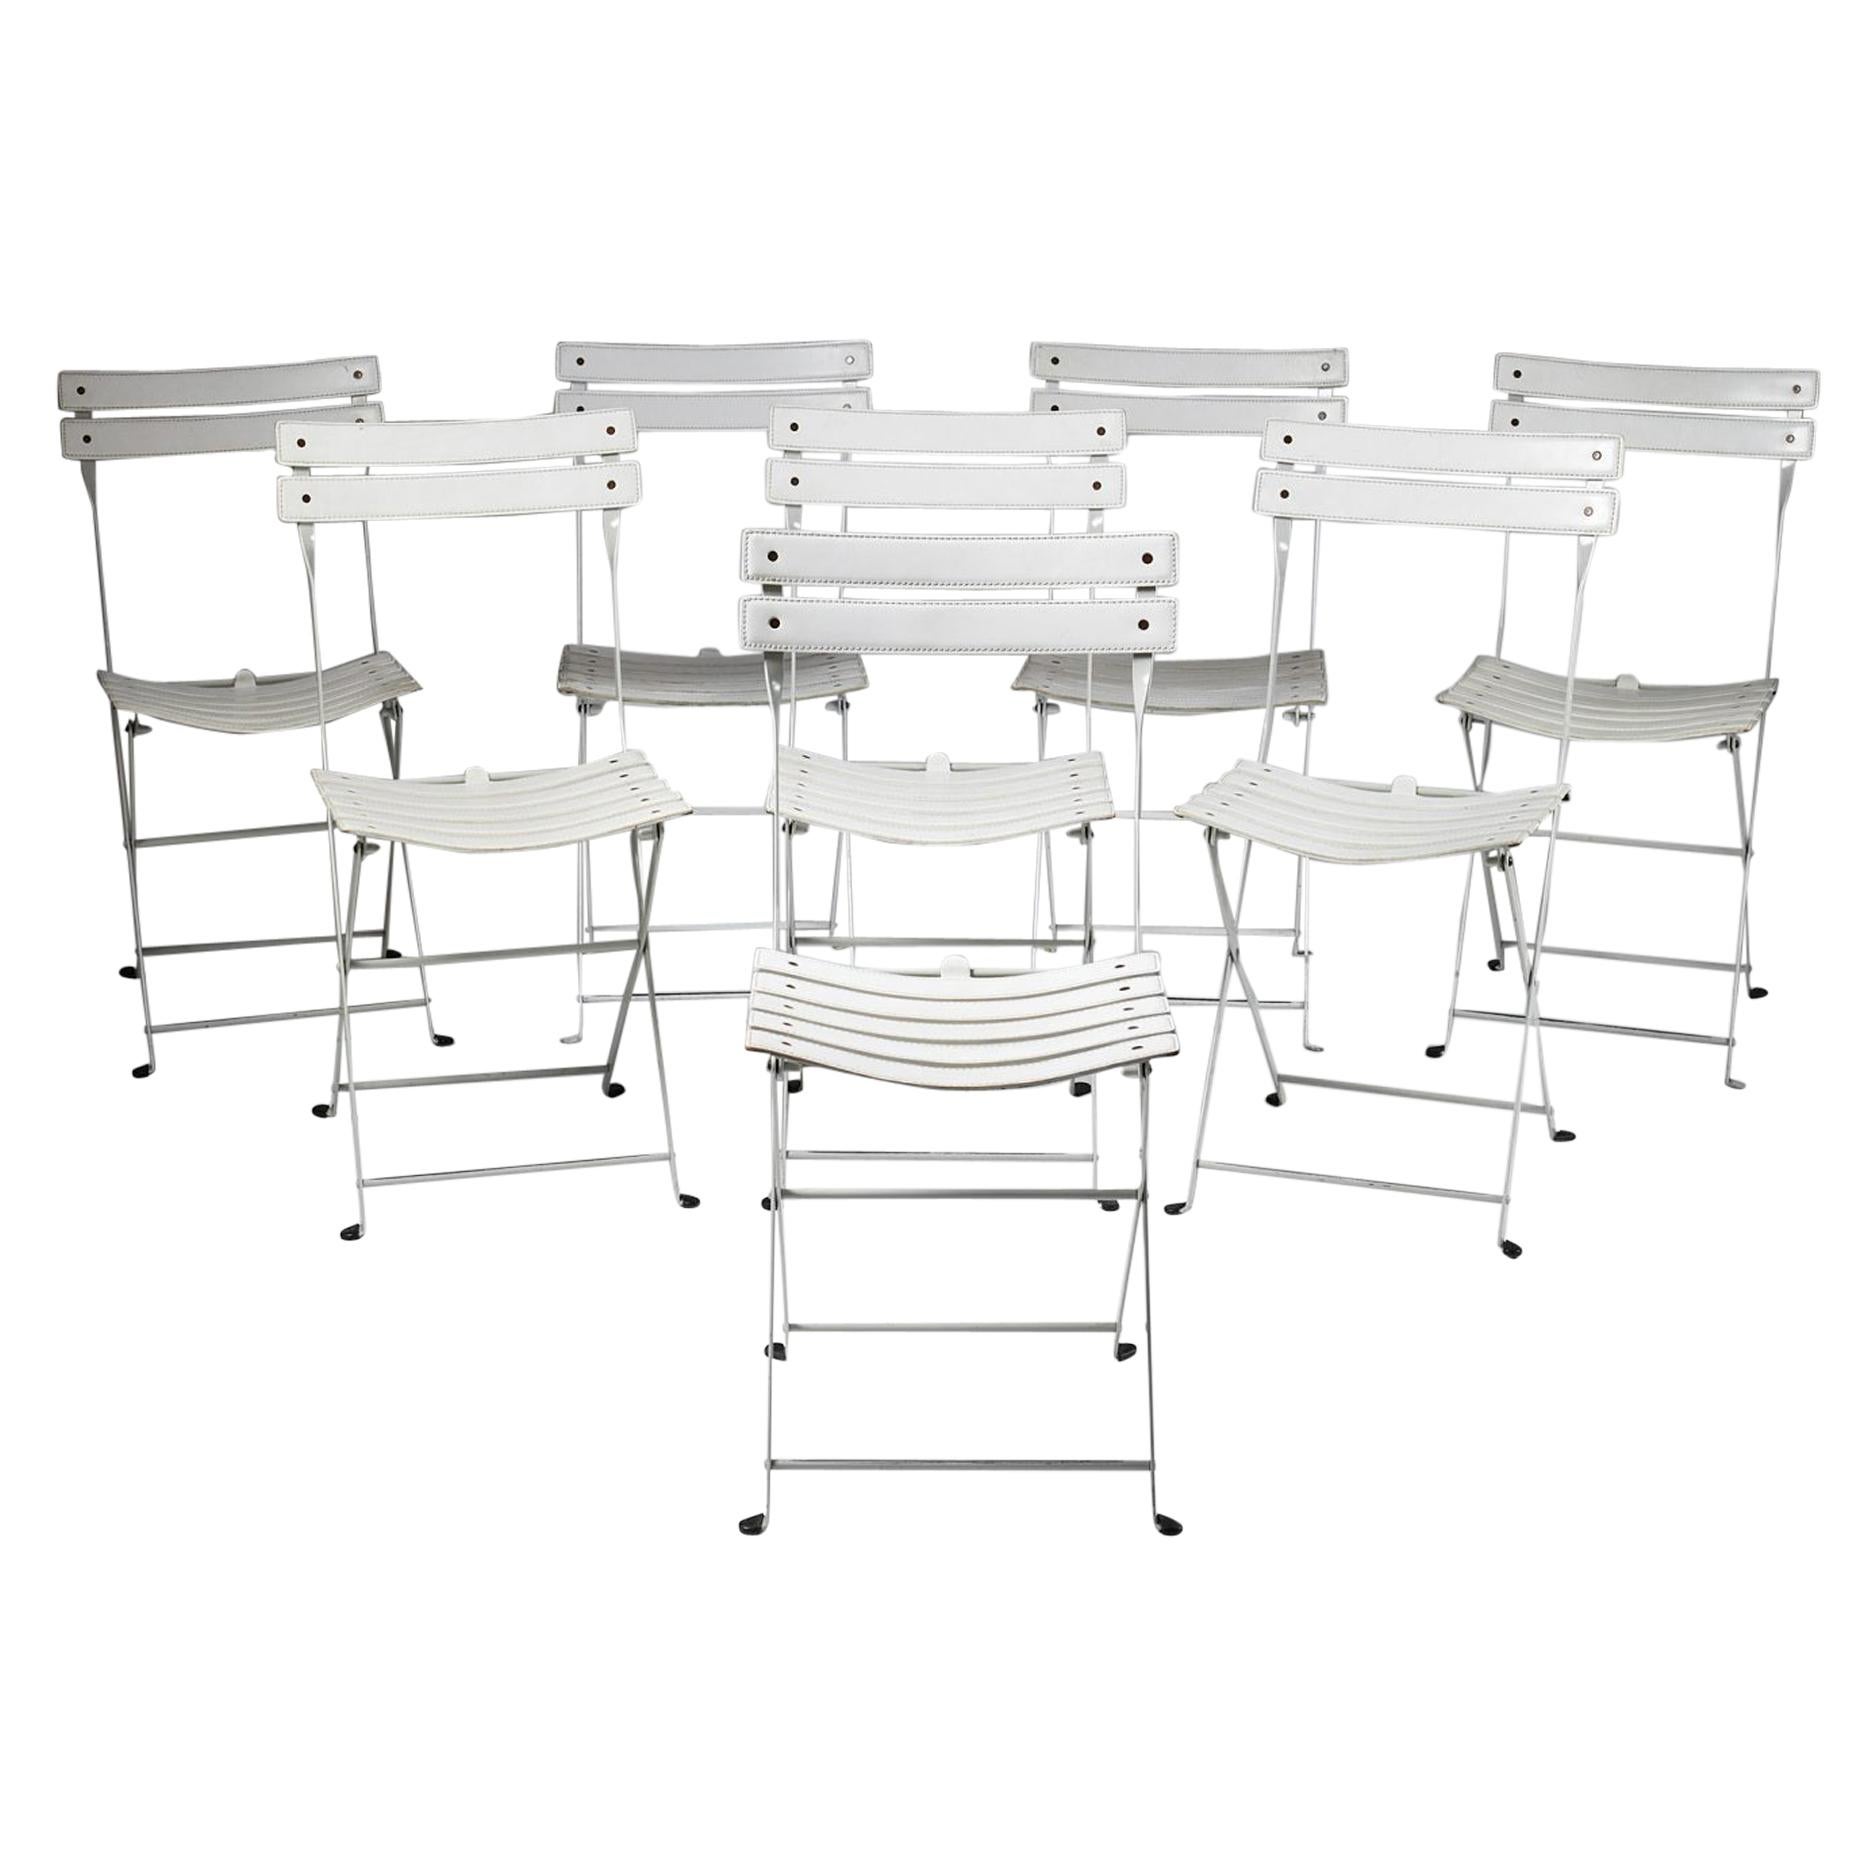 Eight Chairs “Celestina” by Marco Zanuso for Zanotta, Italy, 1978